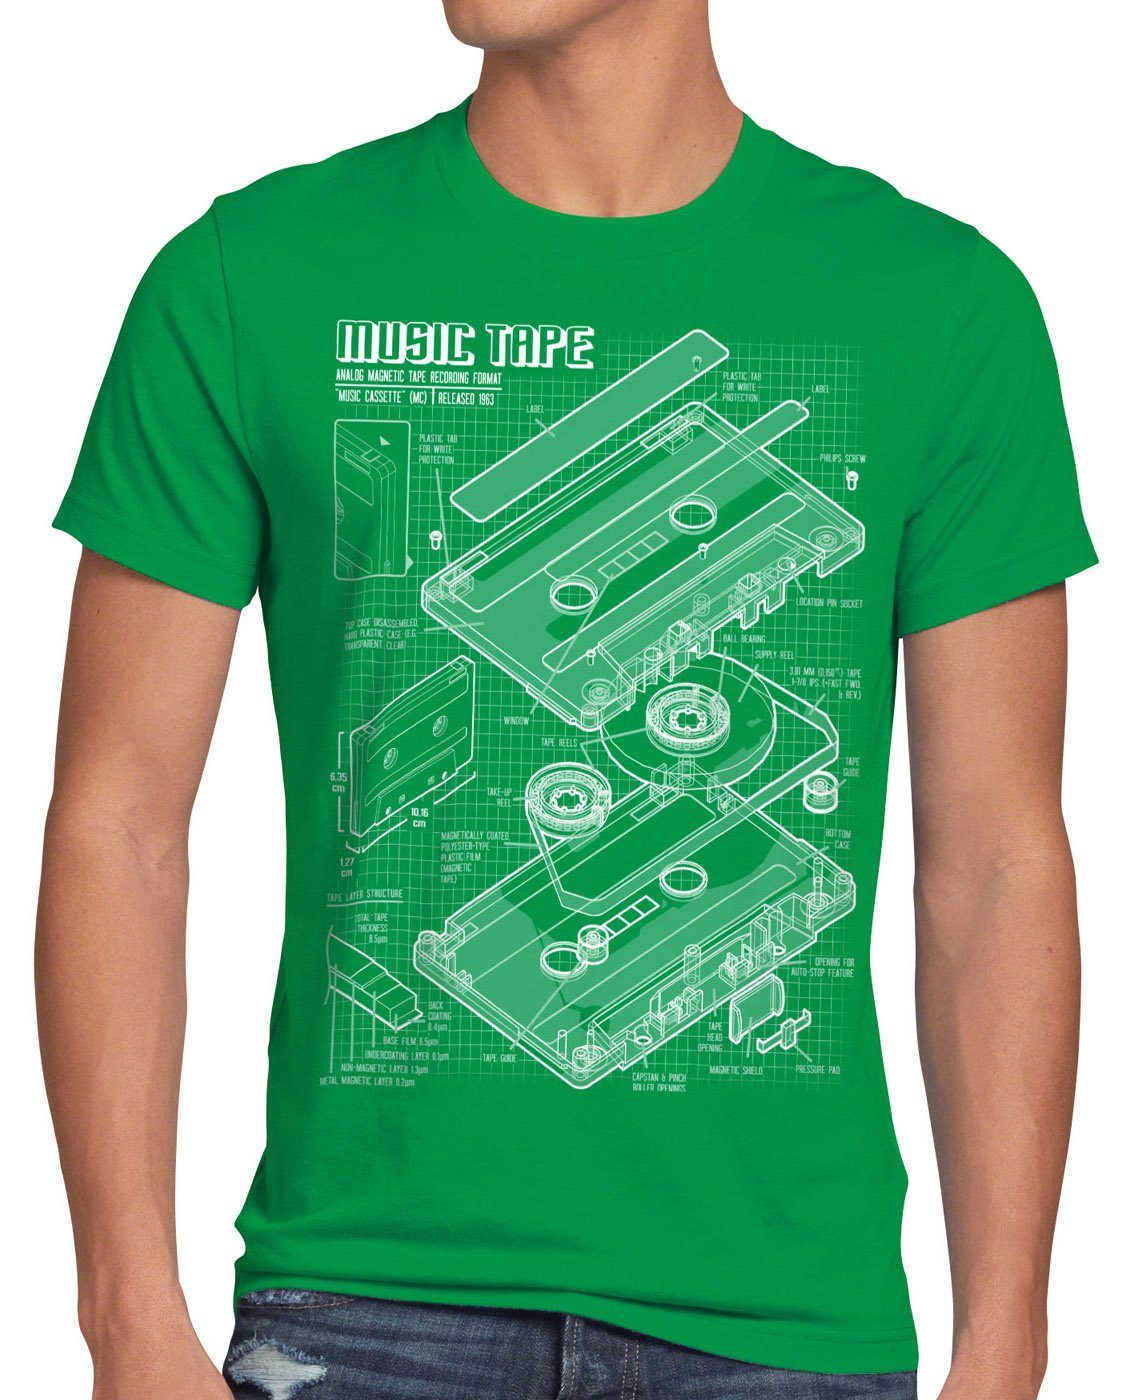 grün disko MC DJ Print-Shirt musik Kassette turntable T-Shirt style3 retro Herren ndw analog disco TAPE